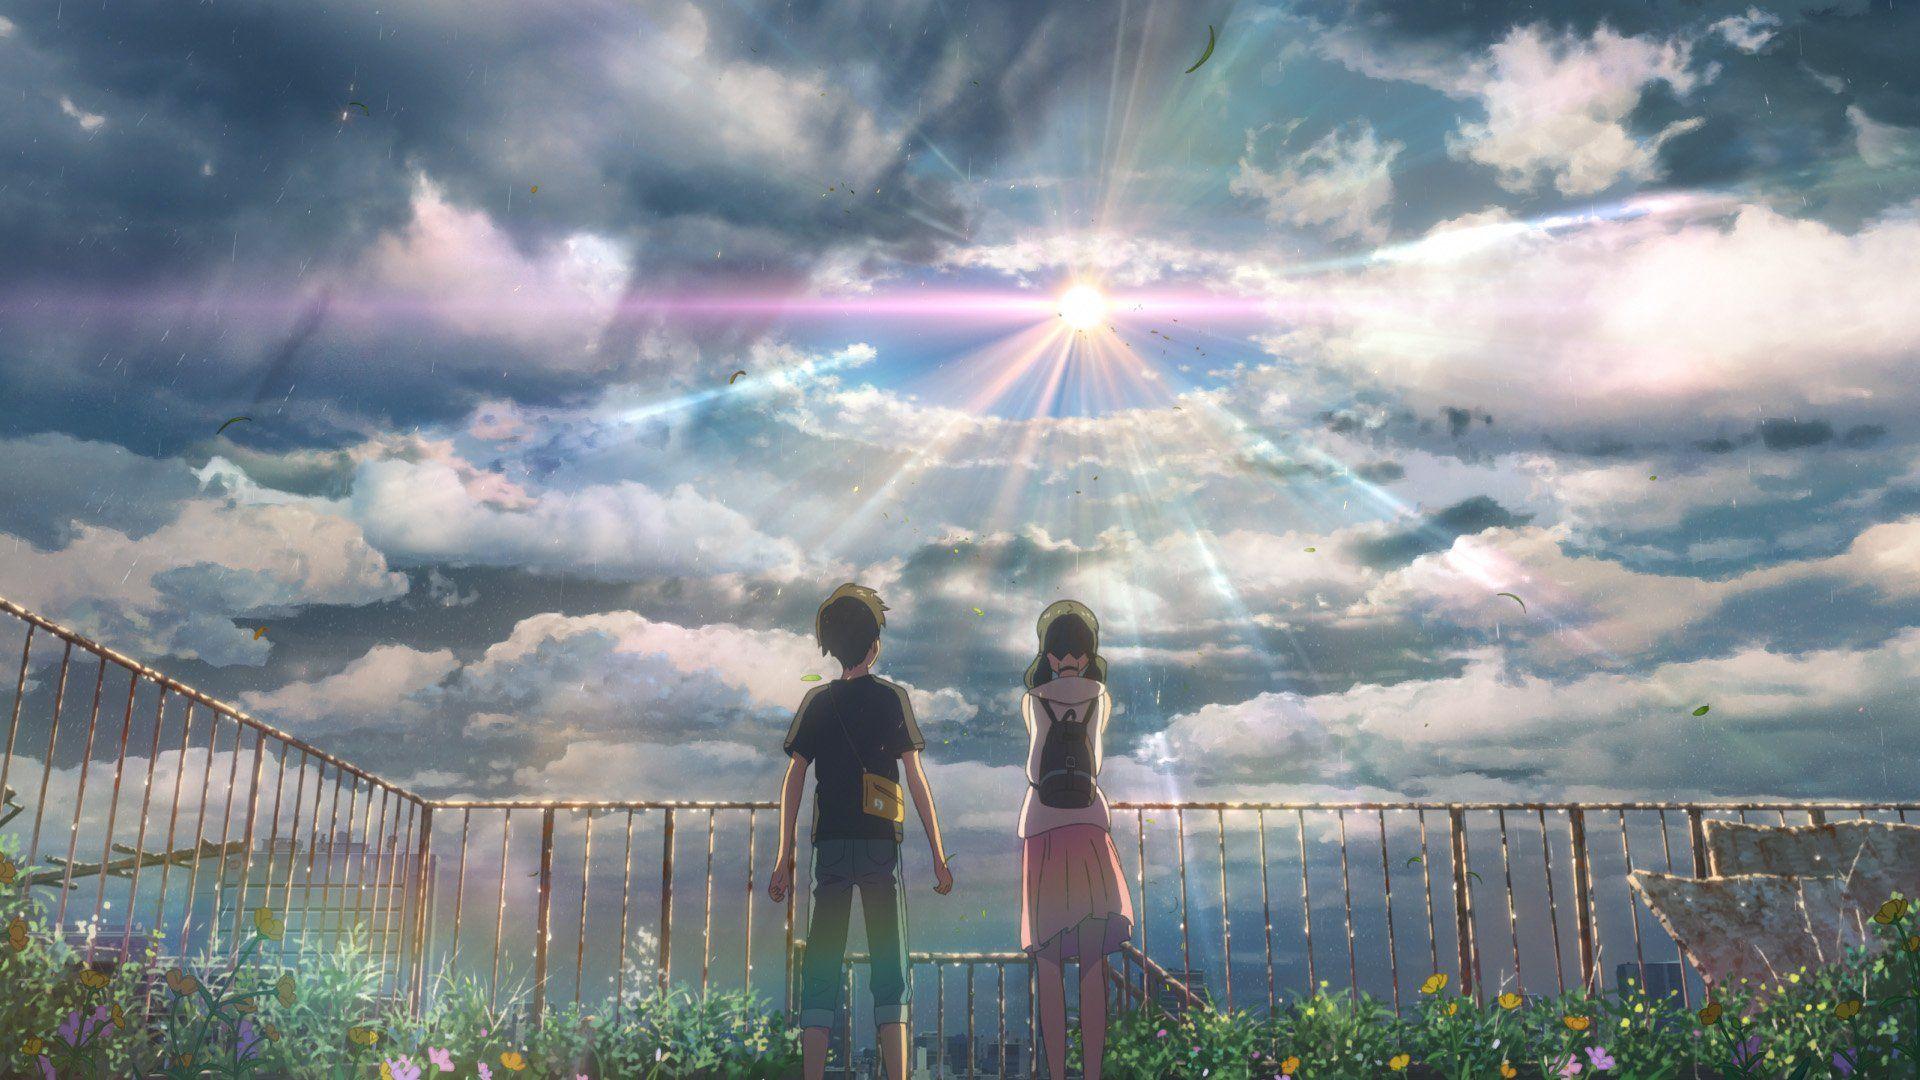 Your Name Director Makoto Shinkai Helming Weather Child  Animation  World Network